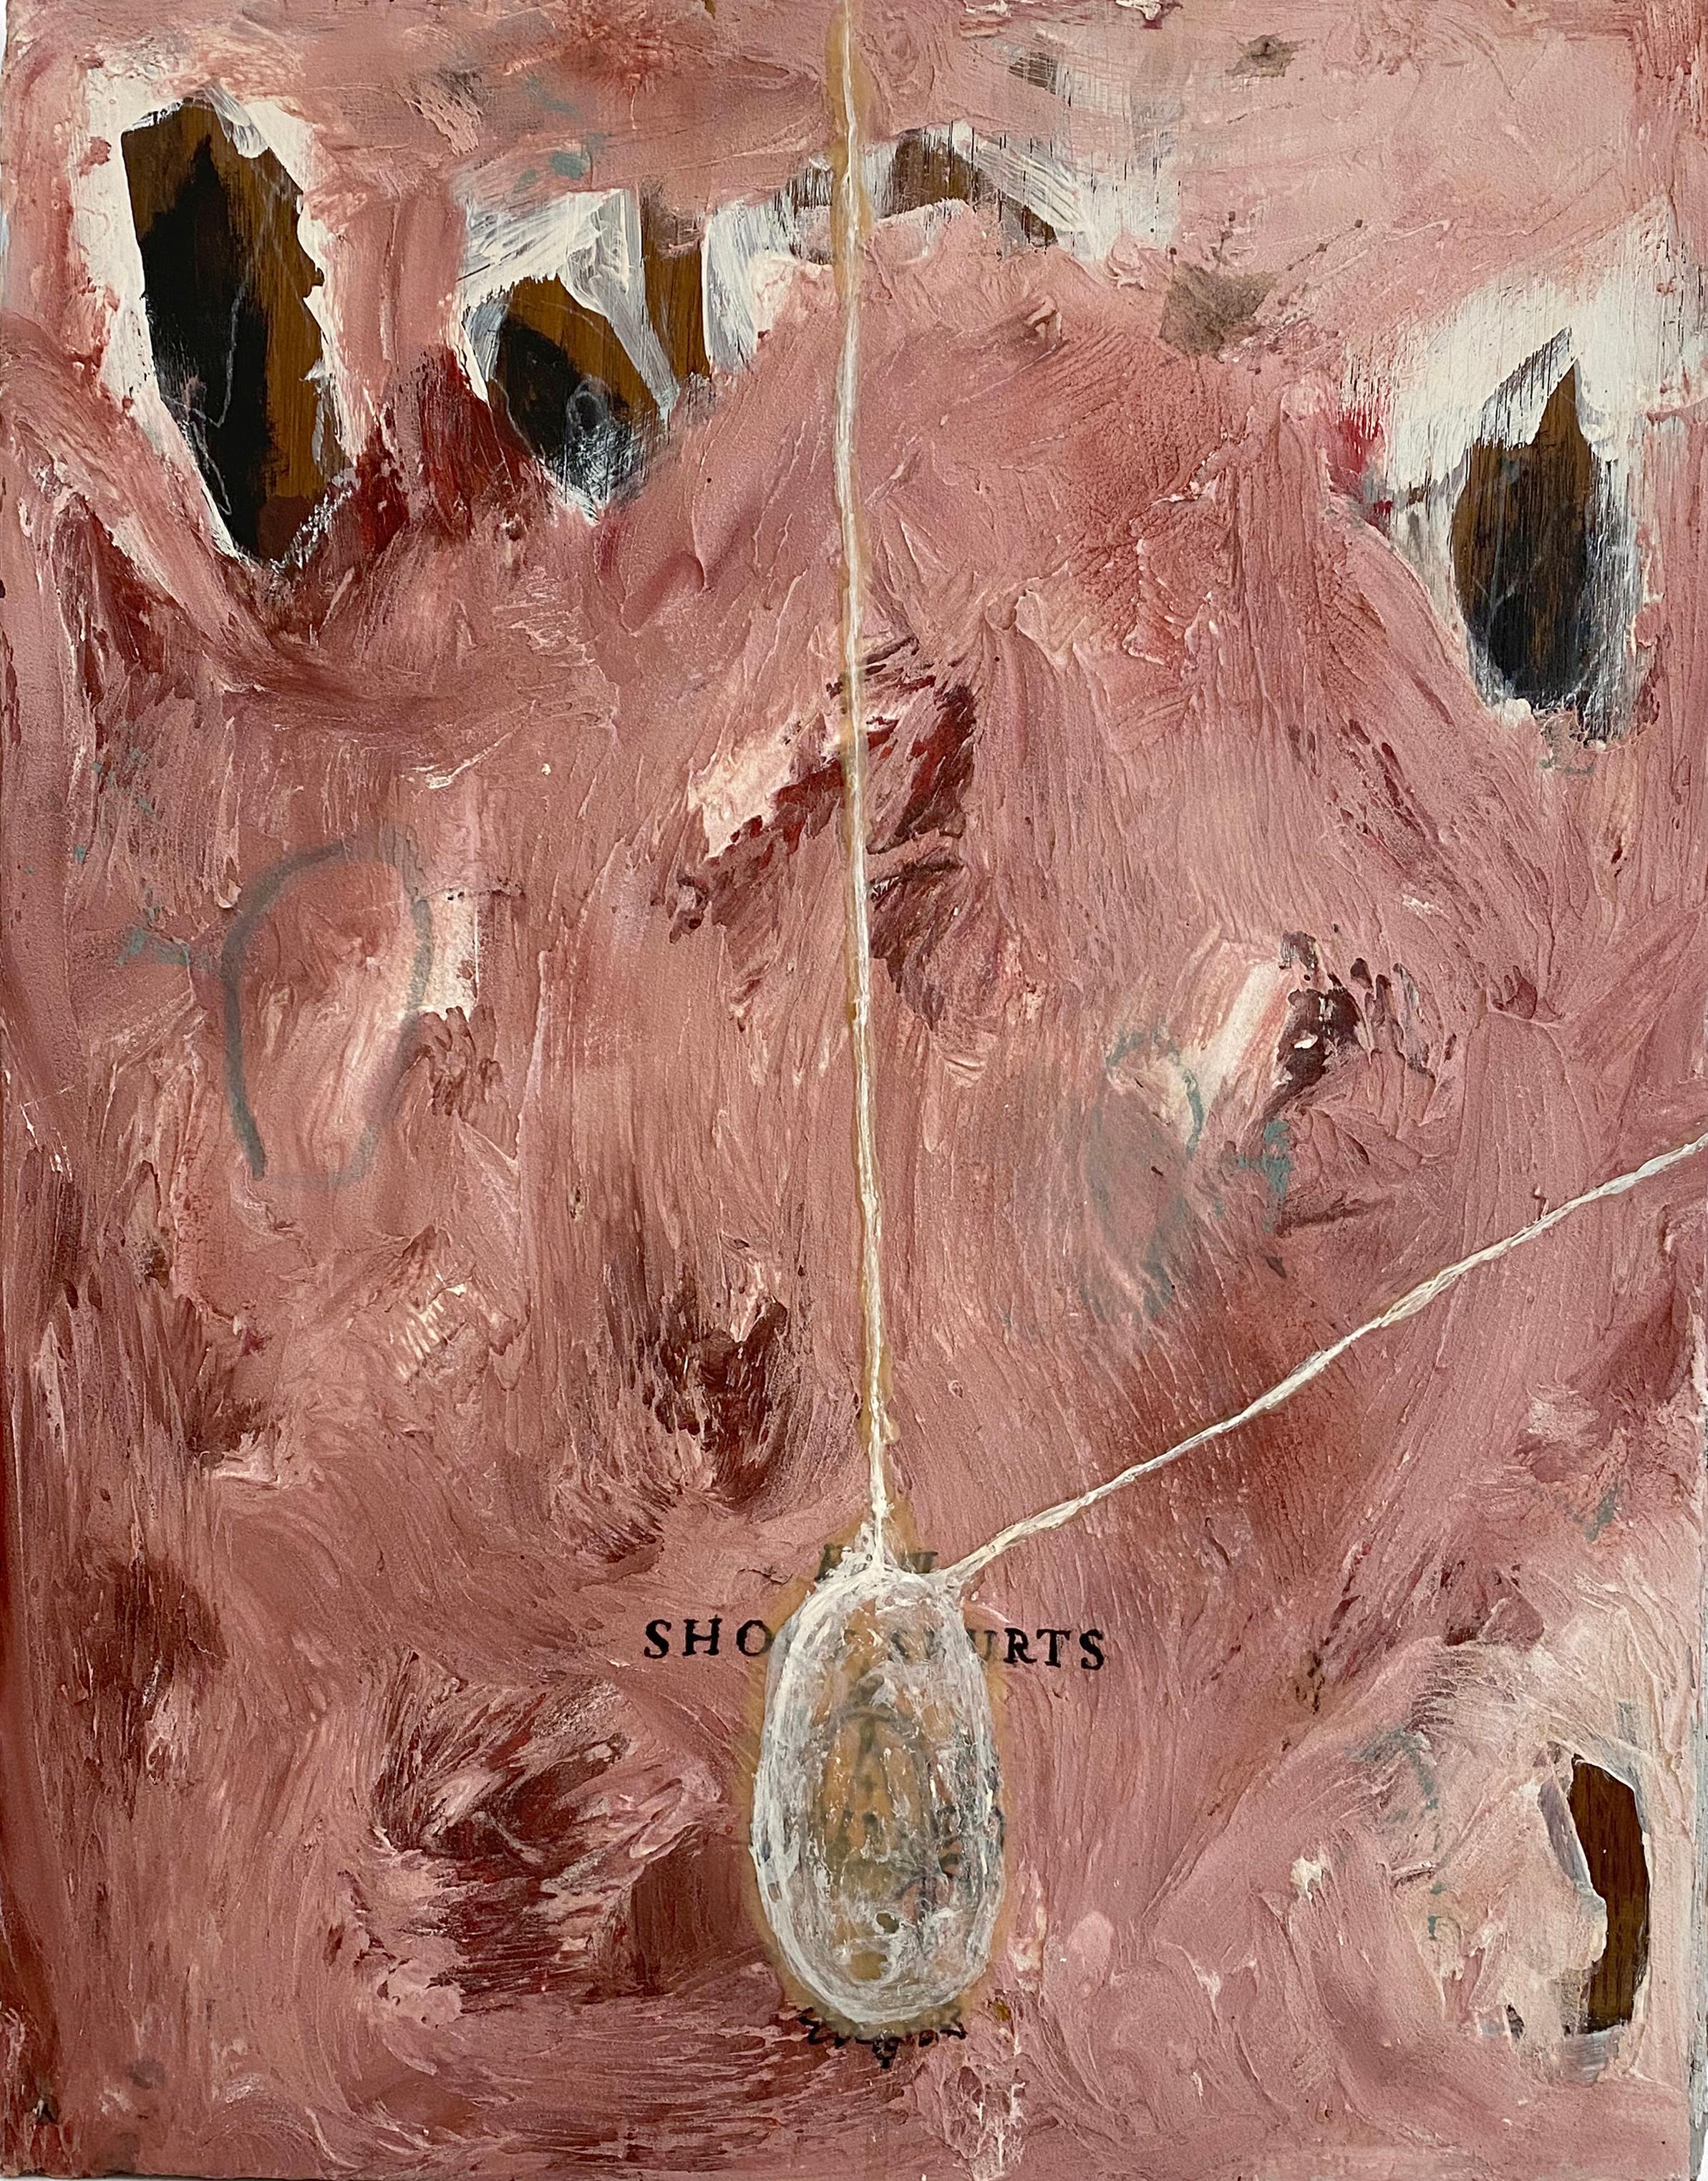 "Short Spurts" (Abstrait, Vivid Pink, Feminine, Women, Painting, Antique Wood)